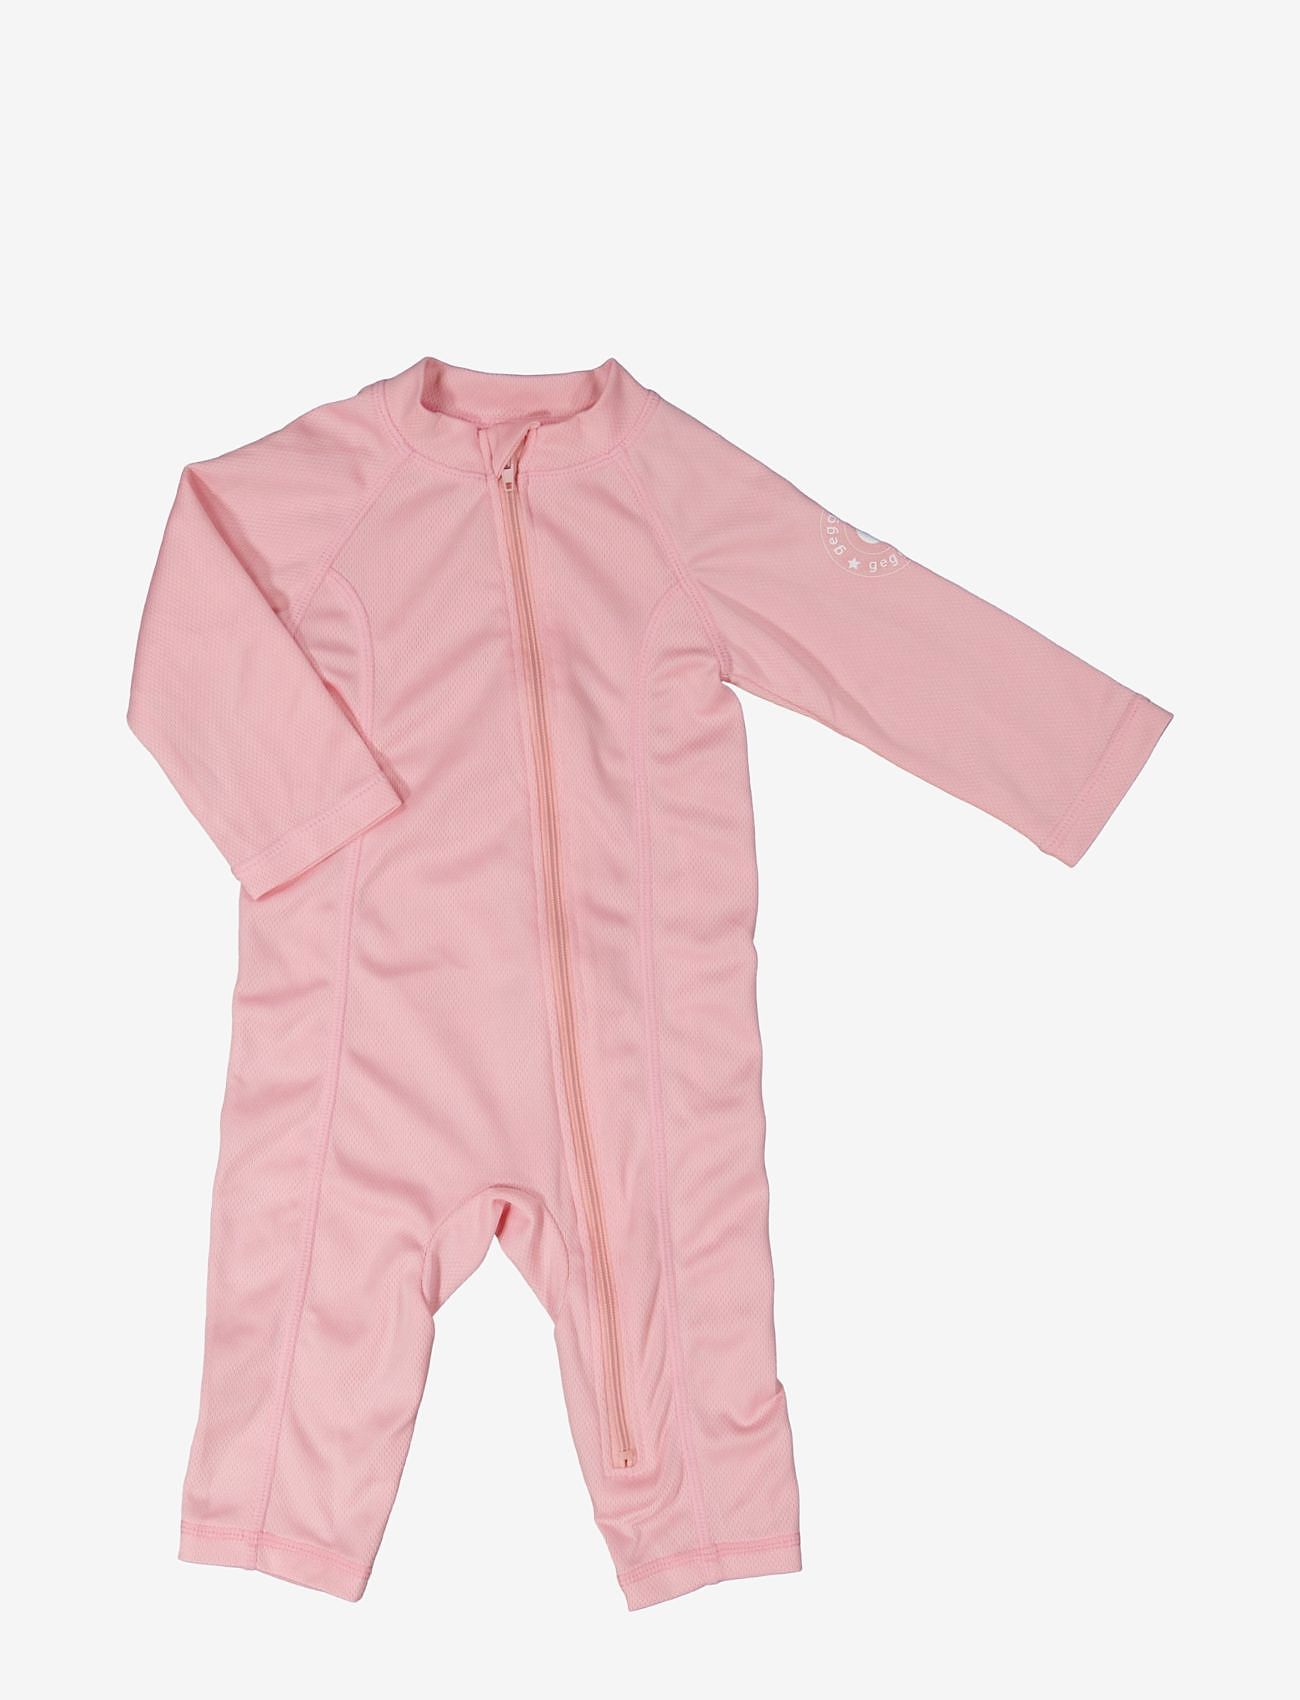 Geggamoja - UV Baby suit - summer savings - pink - 1